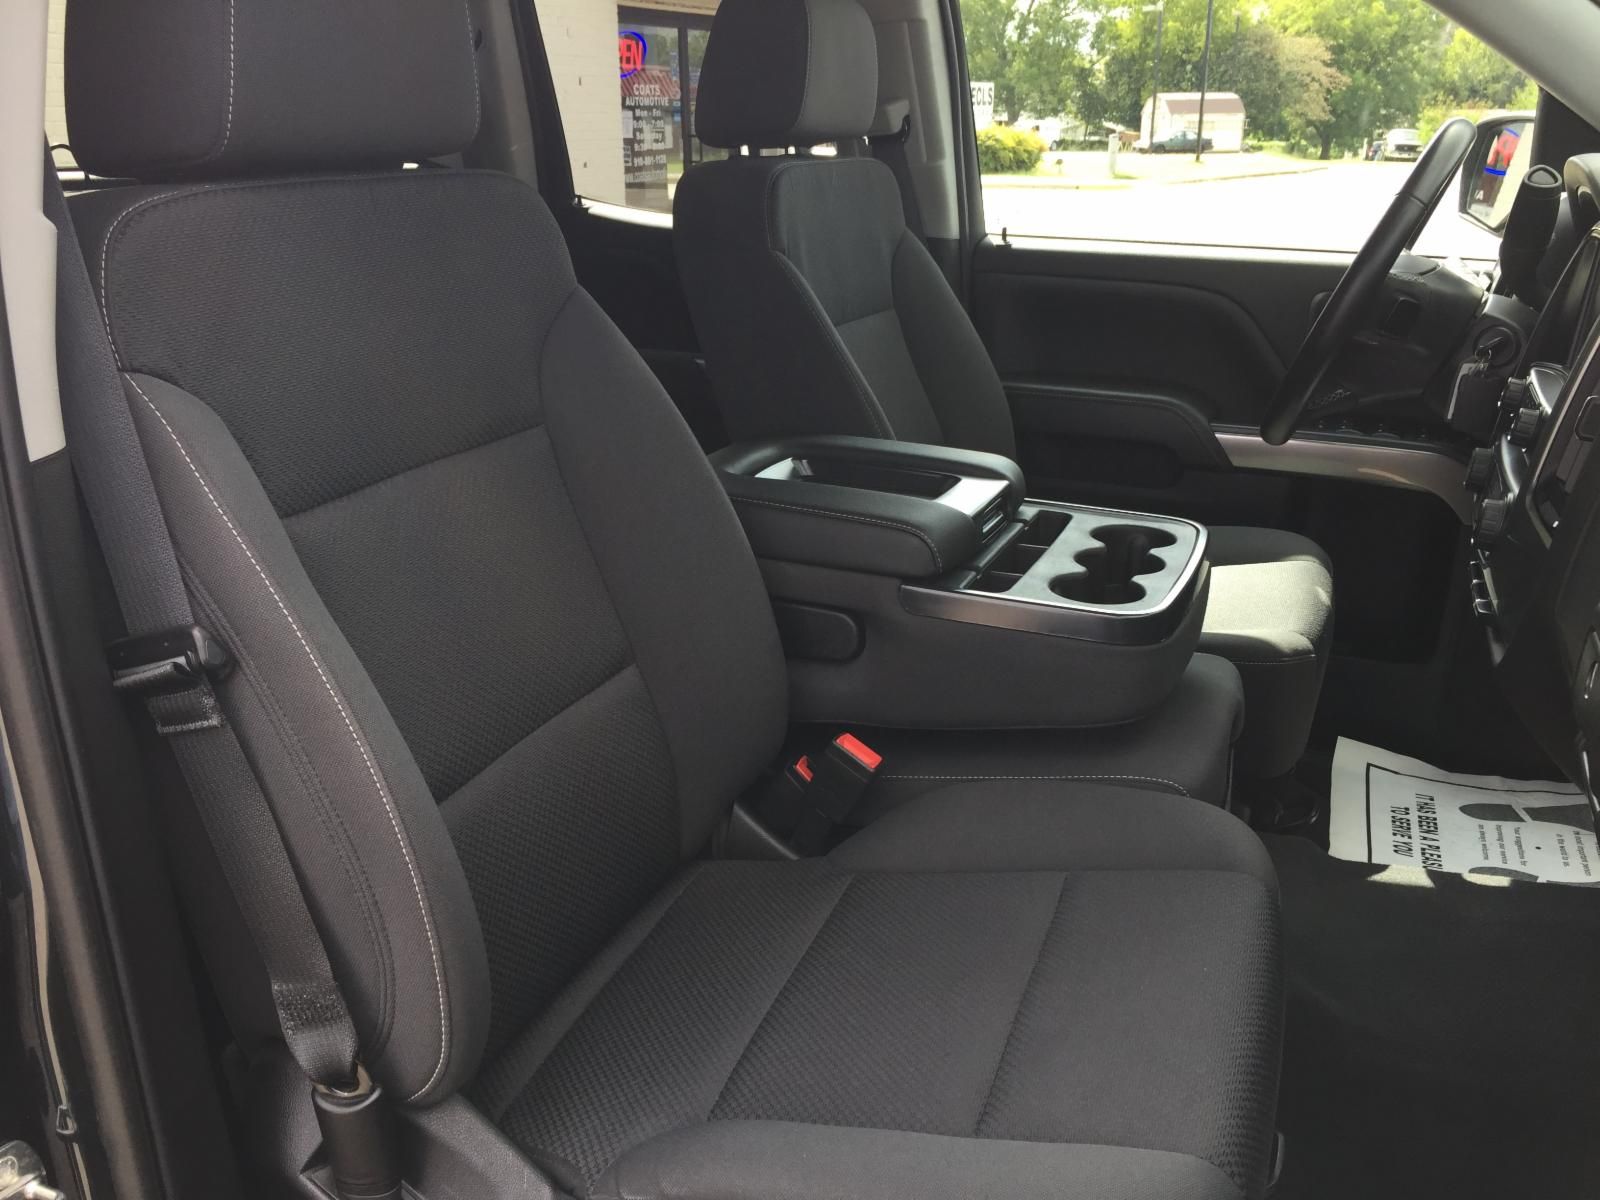 2019 Silverado Seat Covers - Wanna be a Car 2019 Chevy Silverado 1500 Ld Seat Covers